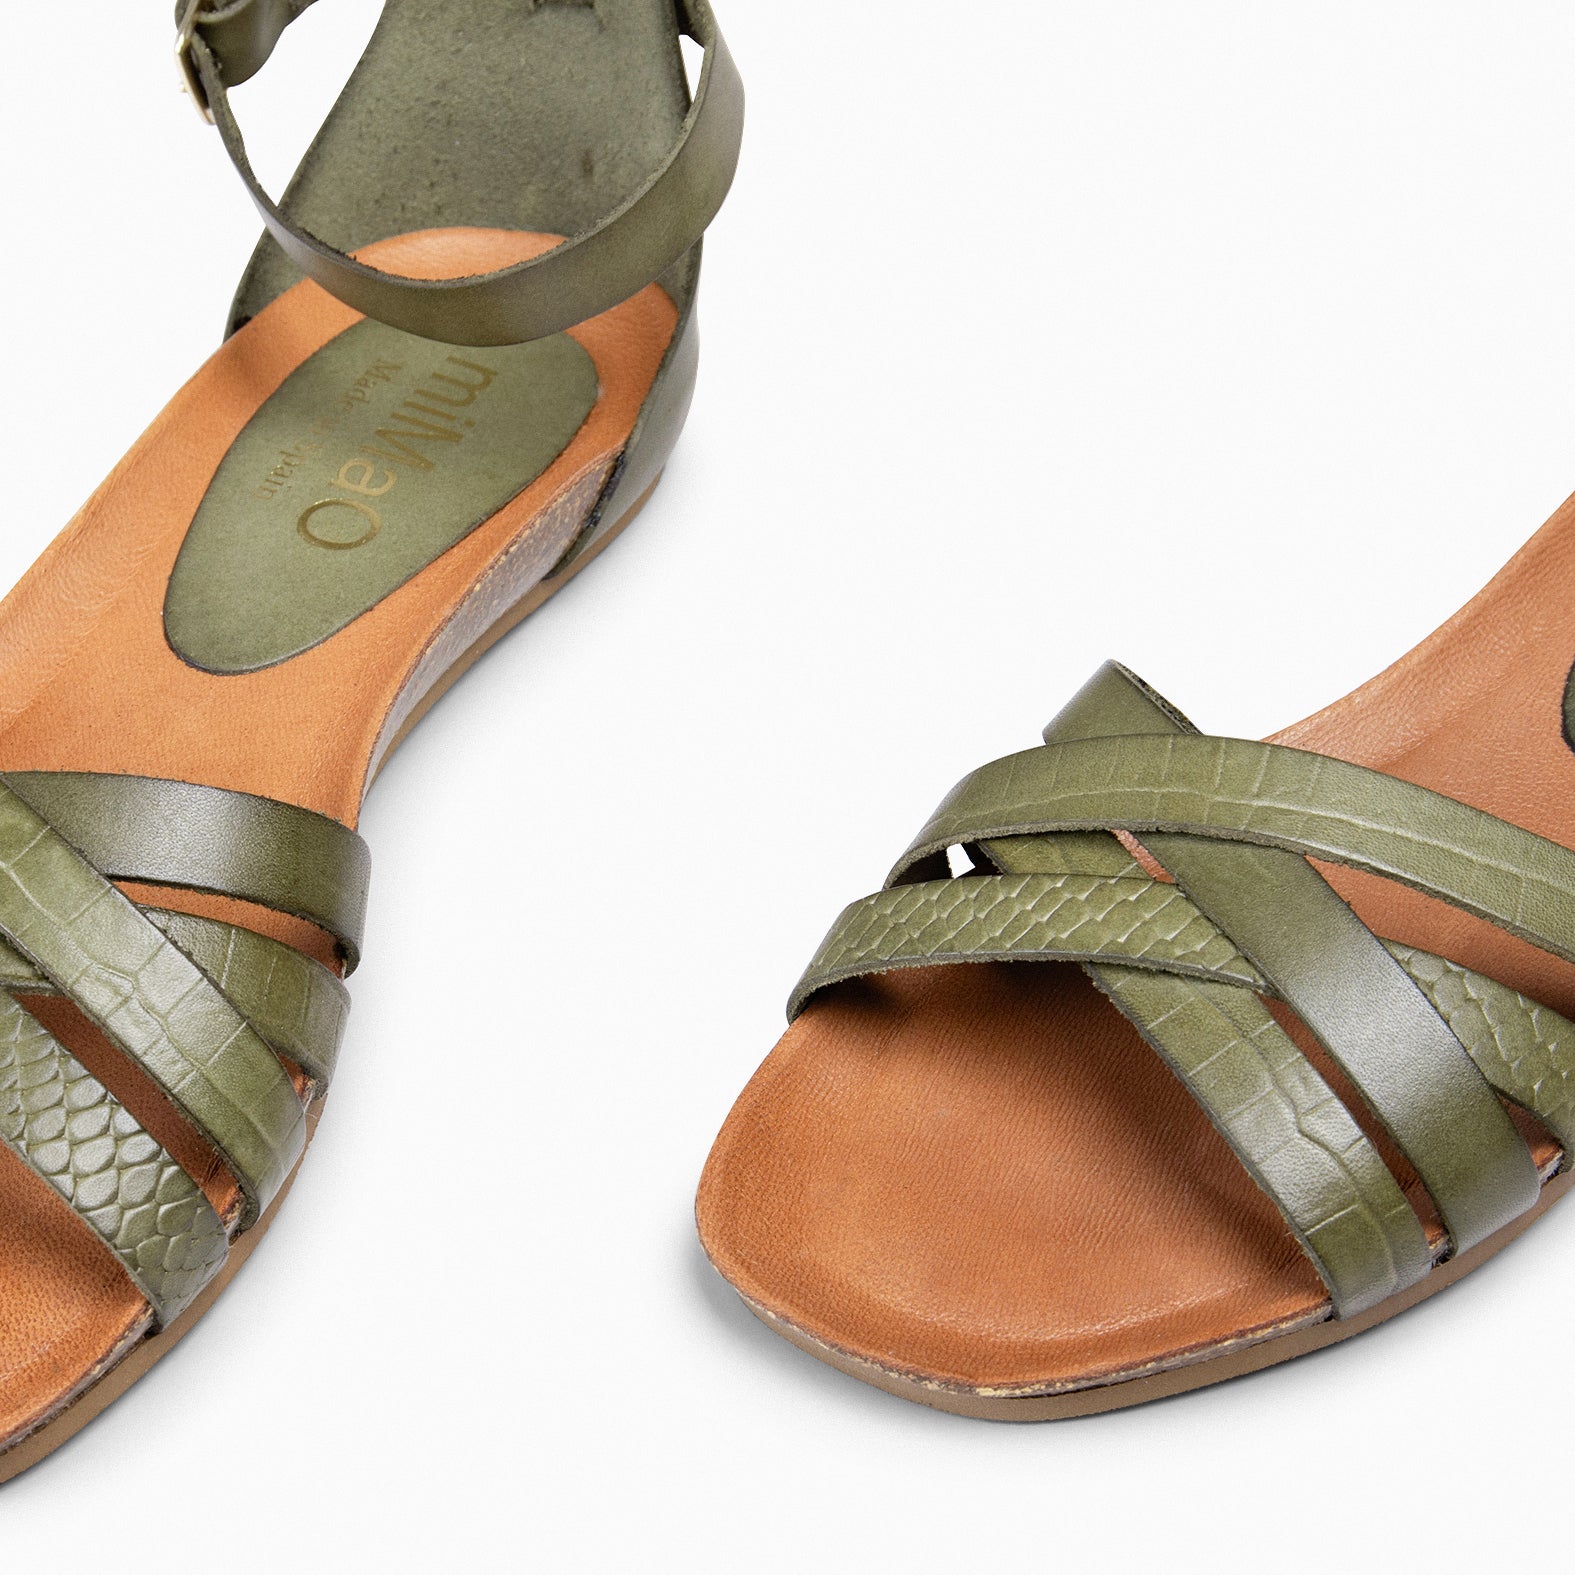 CRISSAL – KAQUI Flat Sandals